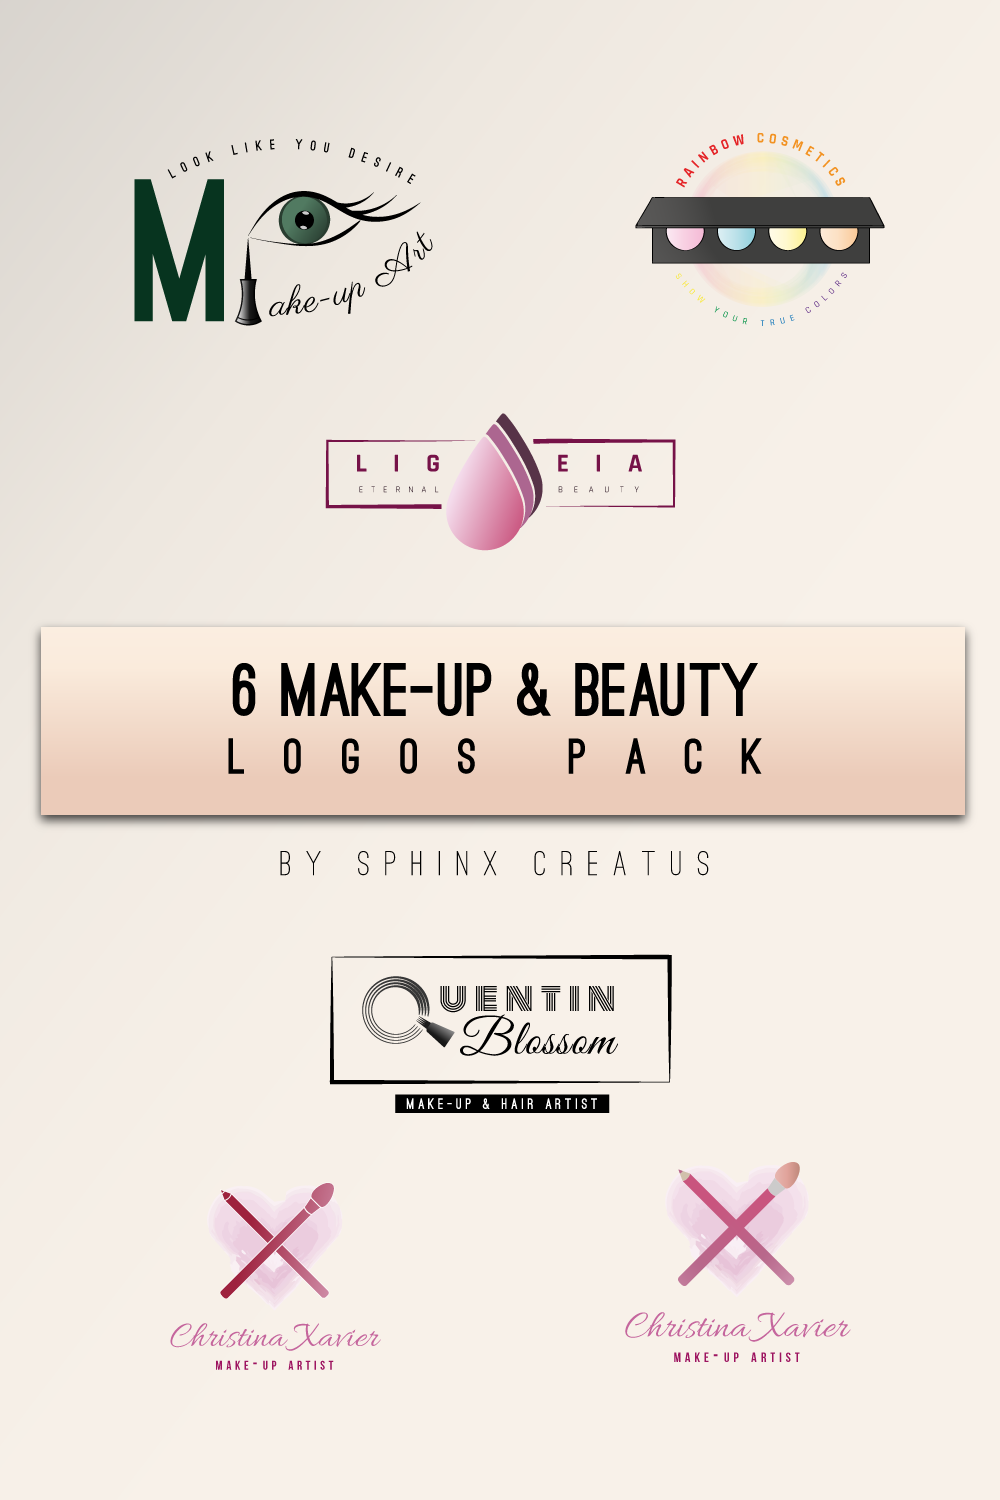 6 Make-up & Beauty Logos Pack [Sphinx Creatus]